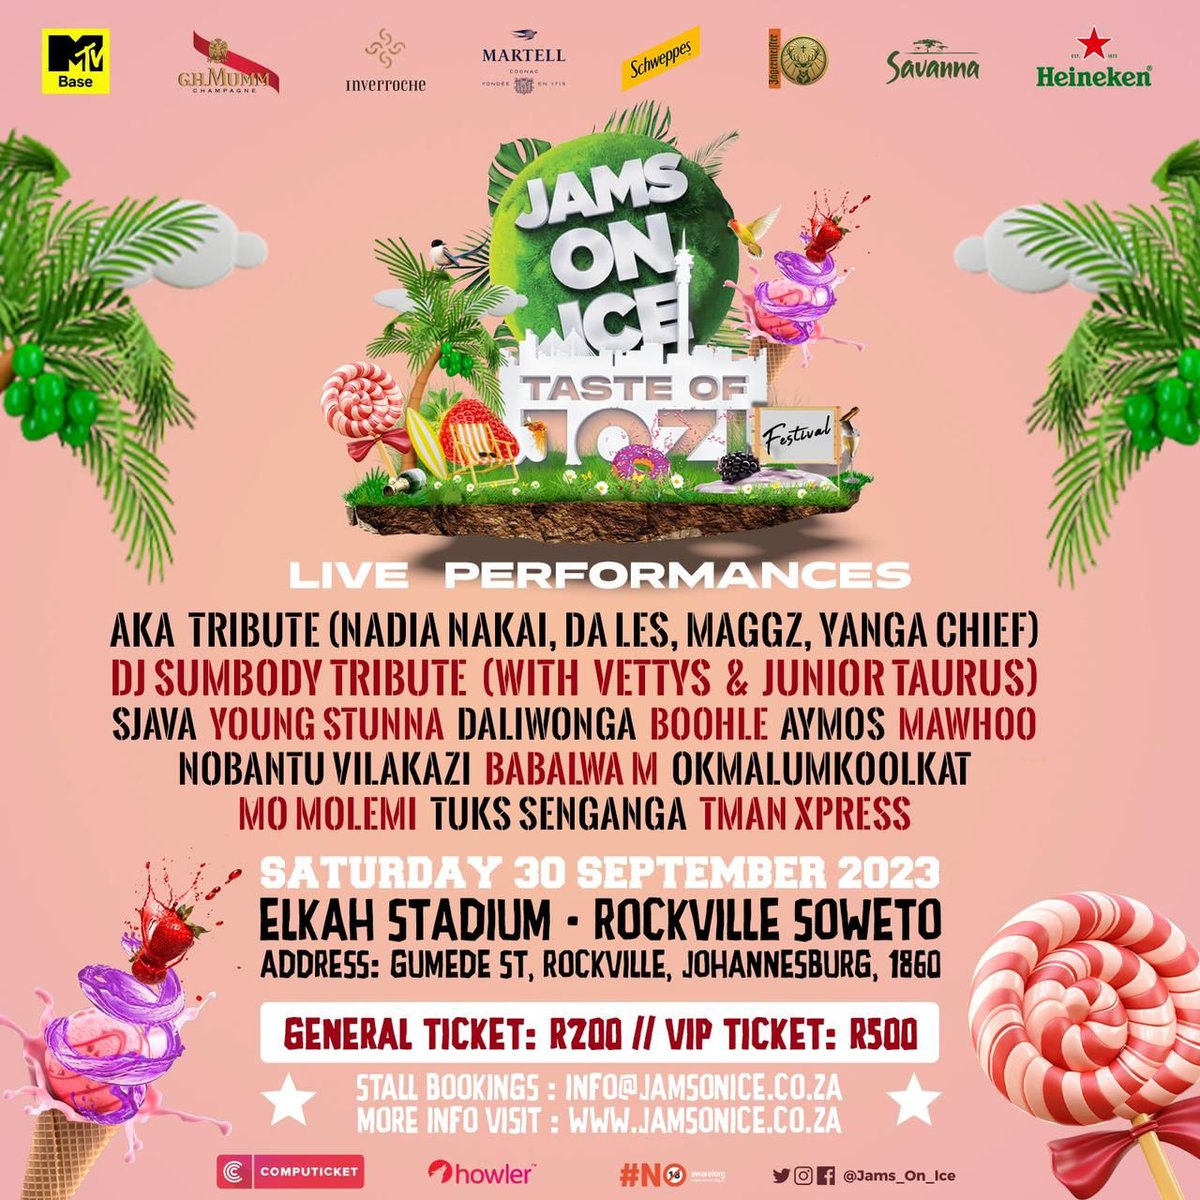 Nayi iplug.....music Festival🤌🏽🔥

Date: September 30 Rockville Soweto, Elkah Stadium

Tickets on sale now!!!

Jams On Ice Festival
#MakubenjaloJamsOnlceFestival